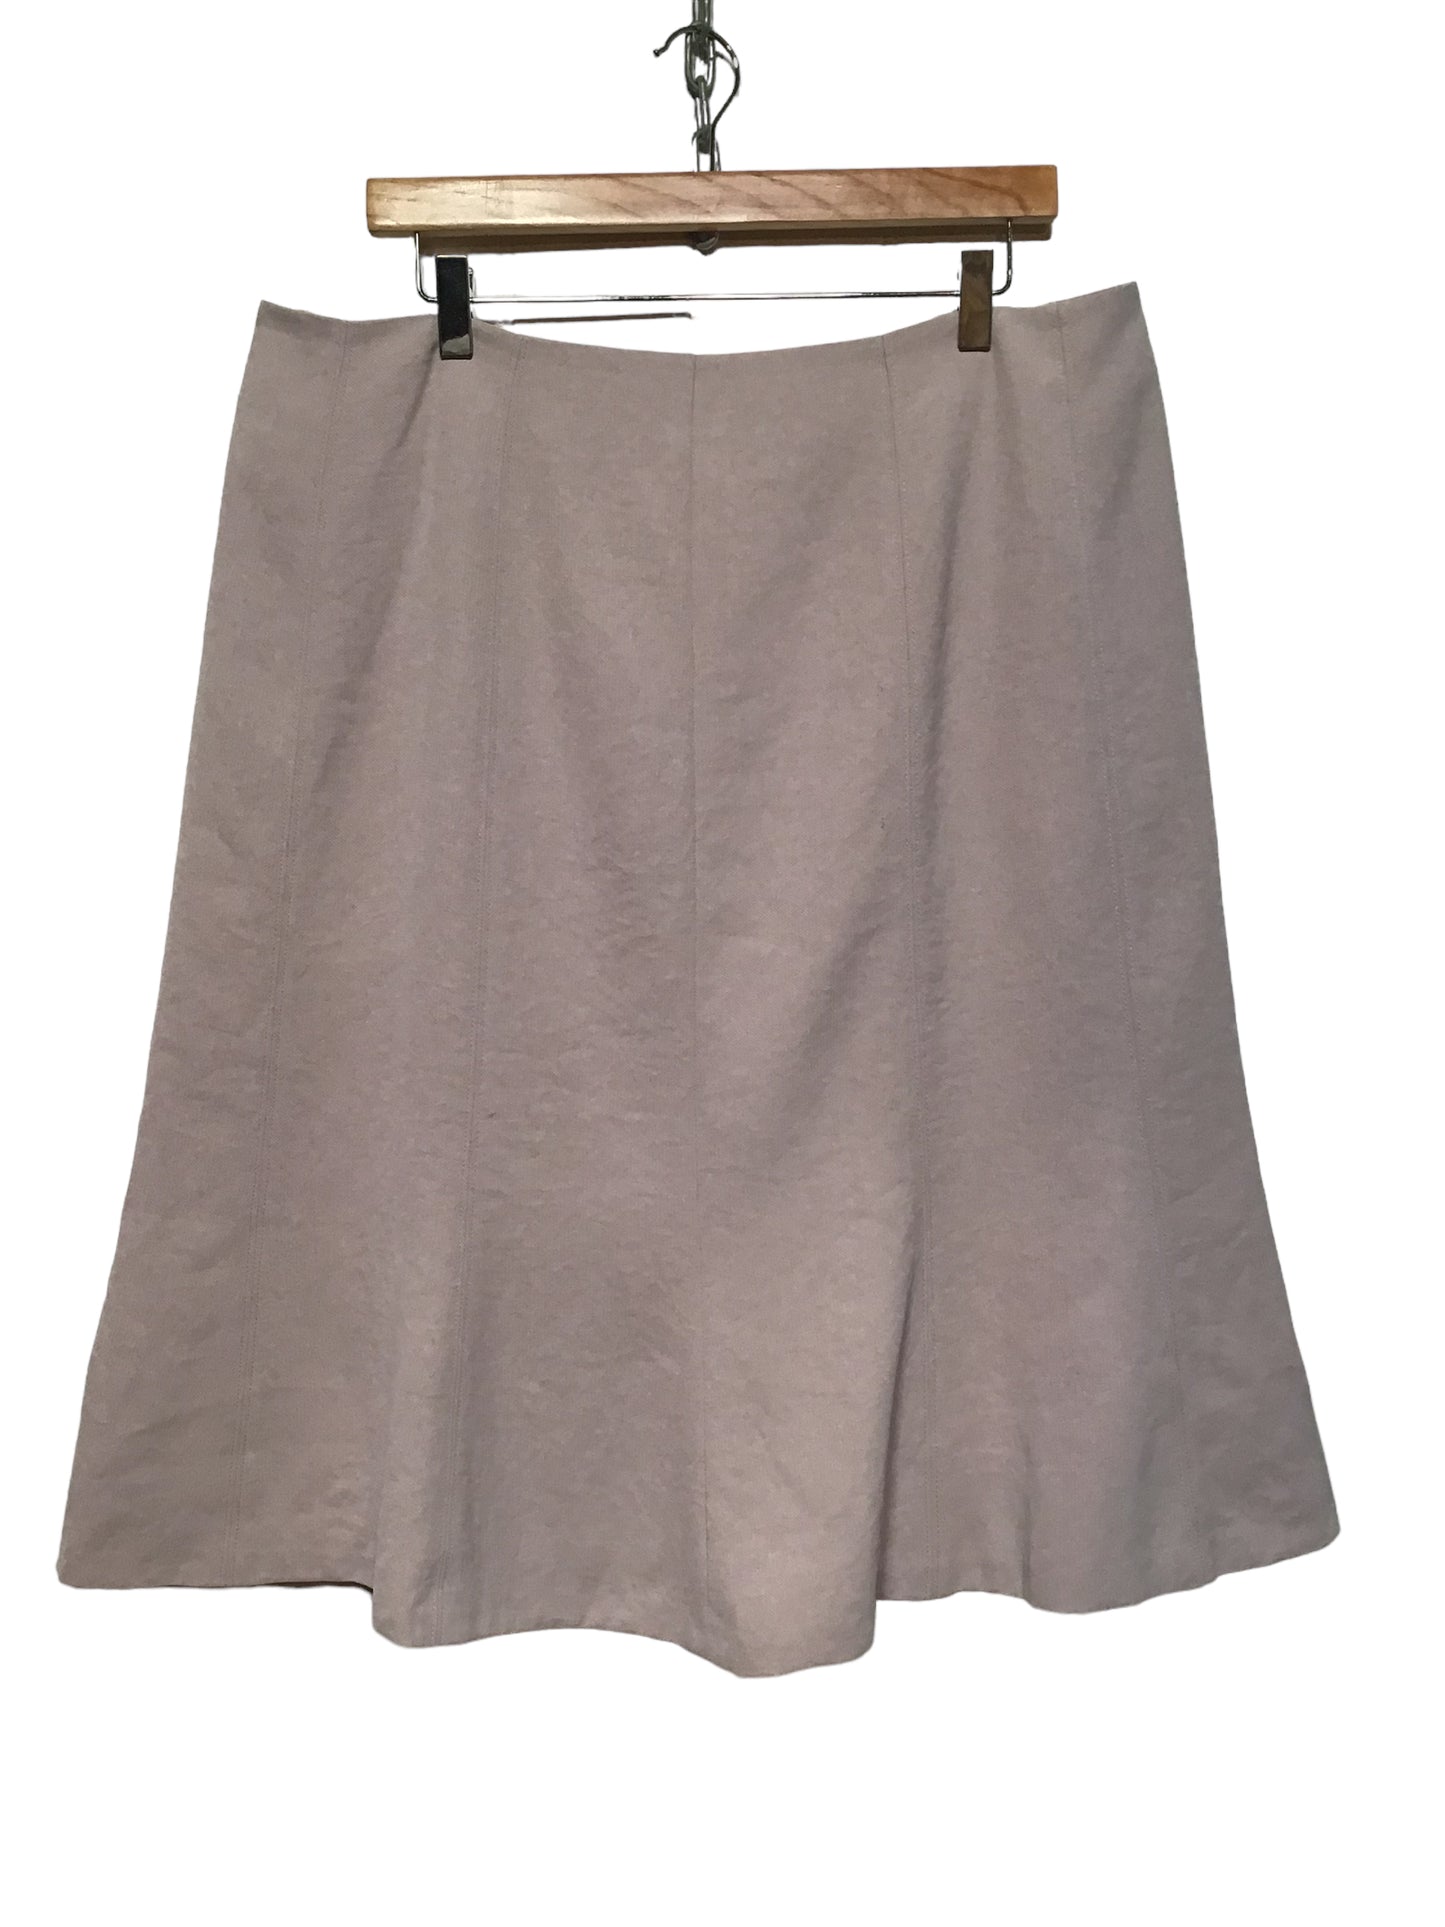 Devernois Skirt (Size L)